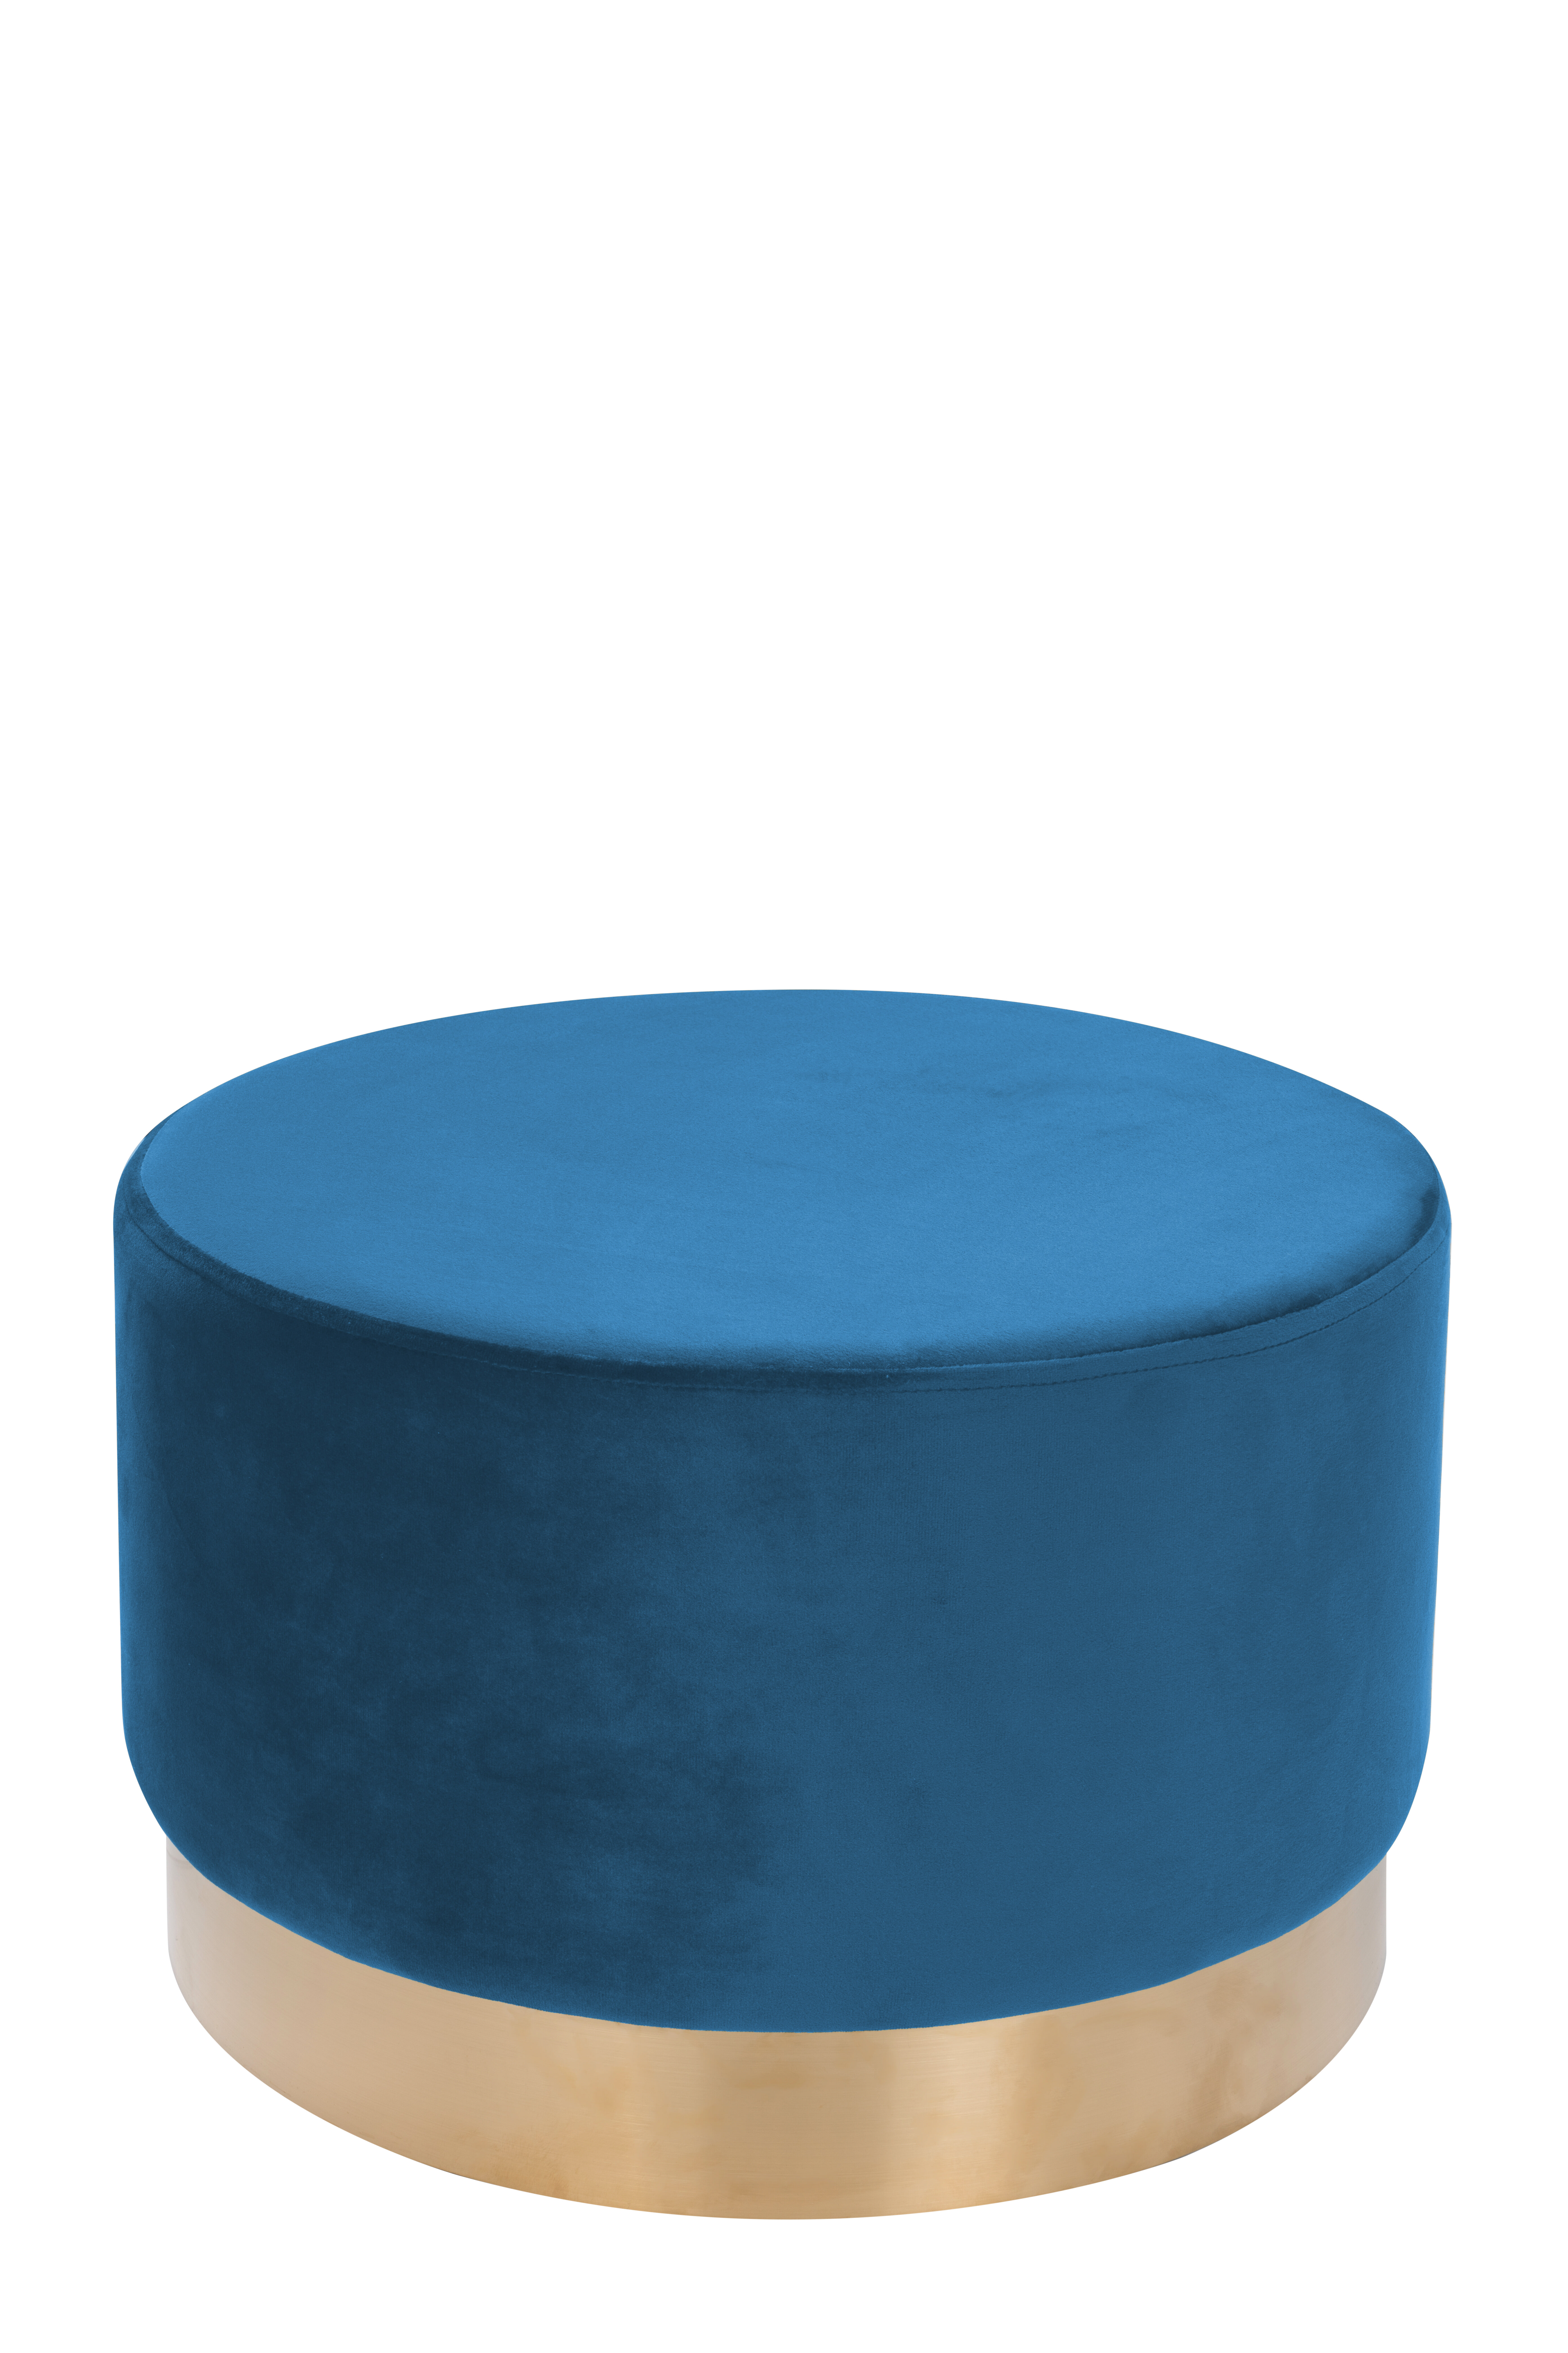 Kayoom Poef 'Nina' 55cm, kleur blauw 510 Blauw